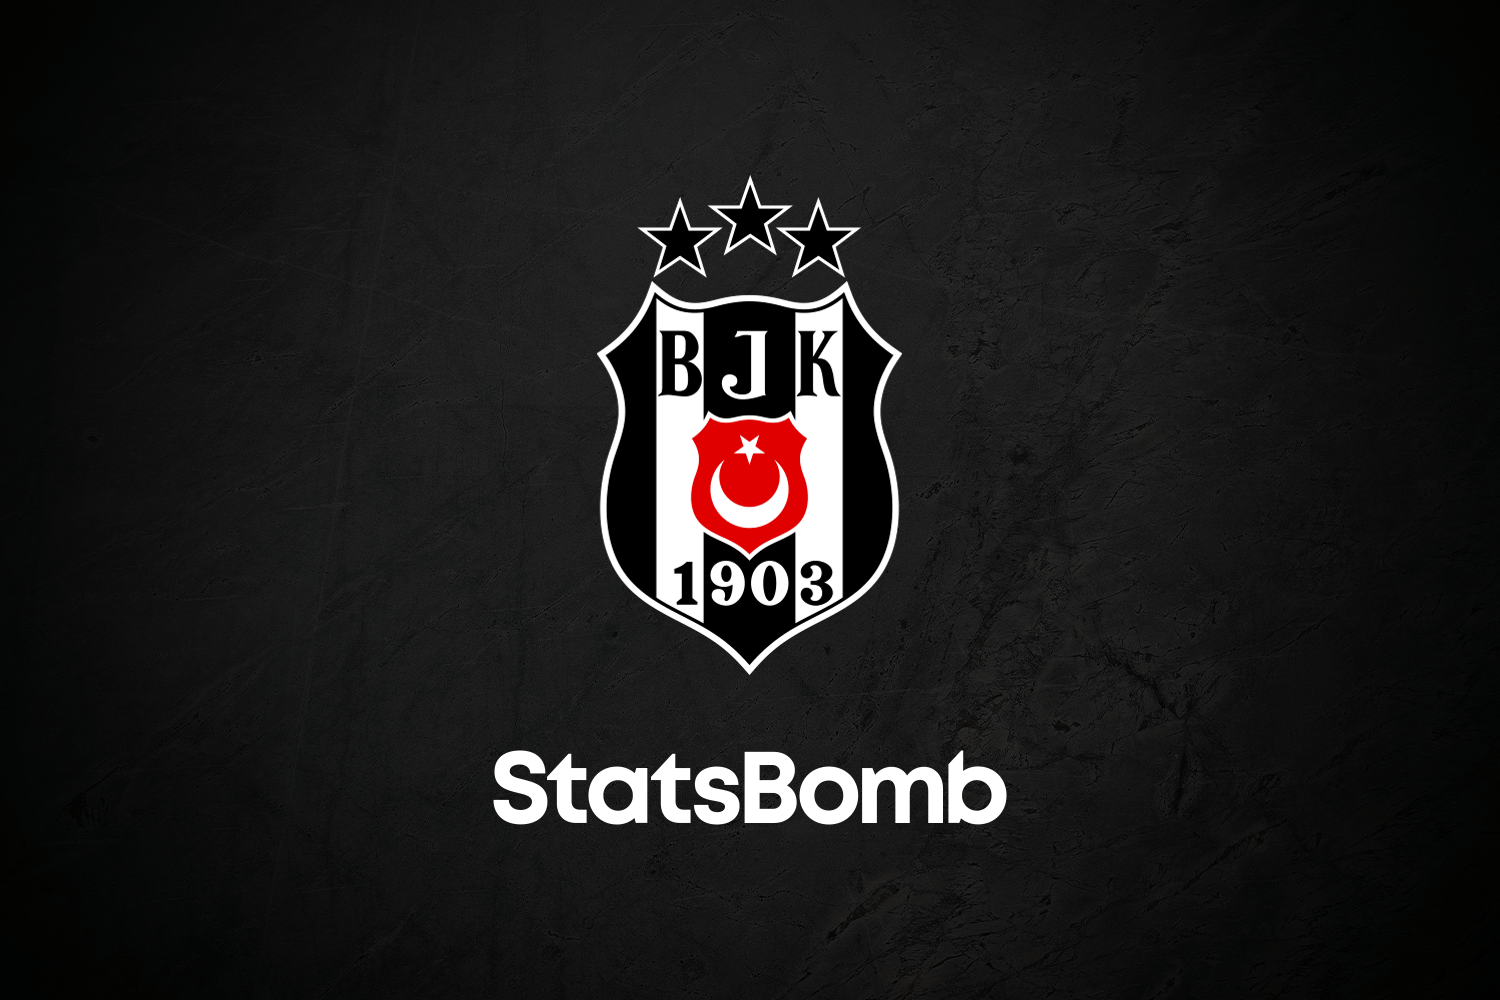 StatsBomb Enter Turkish Market With Beşiktaş J.K. Partnership